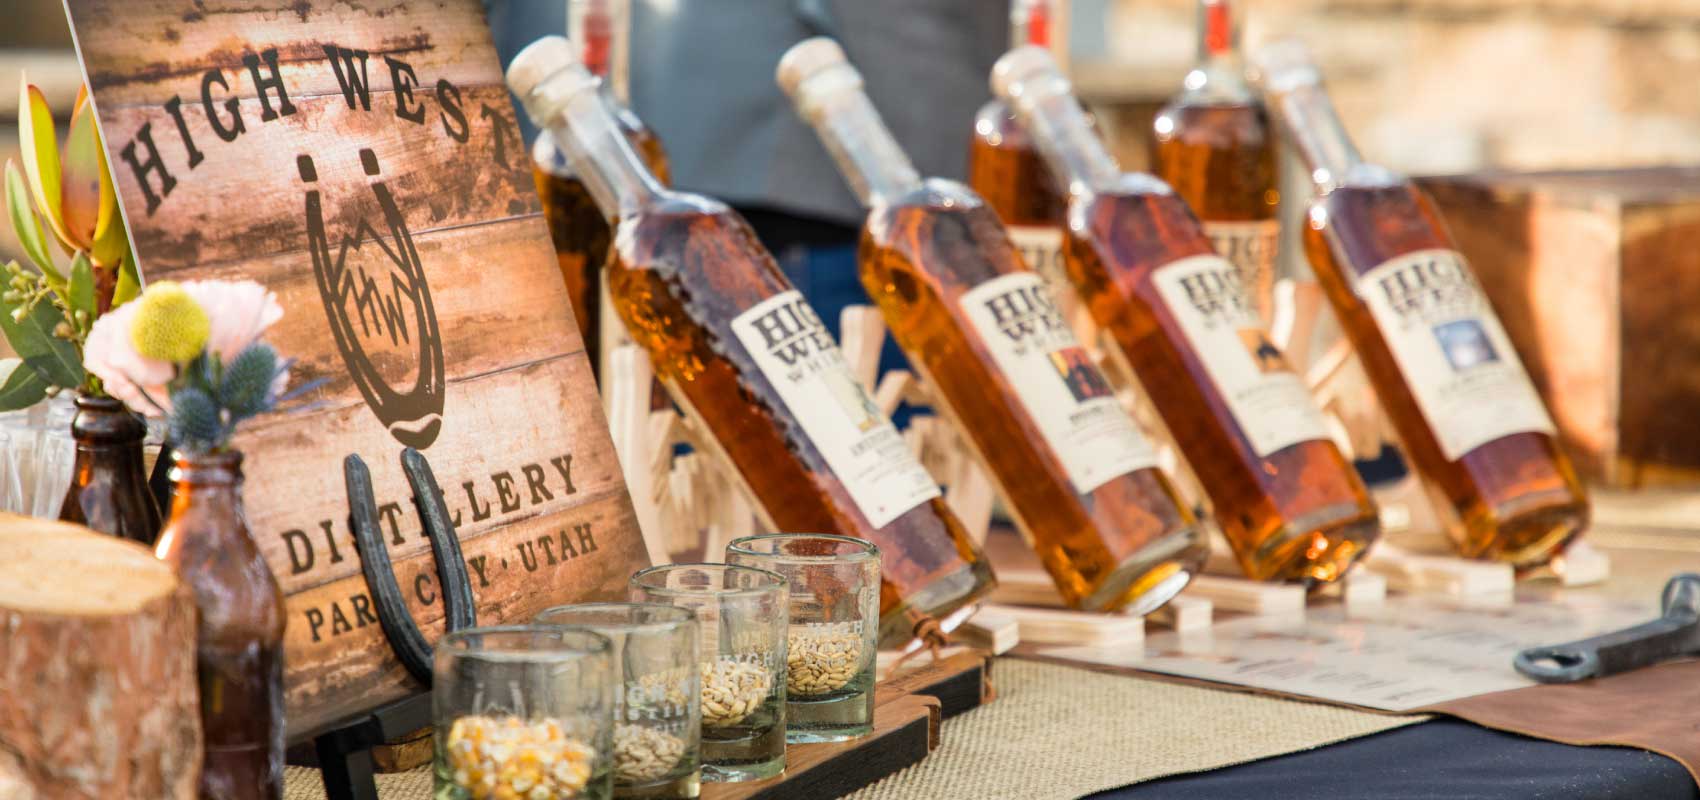 High West Whiskey Tasting with Pairings at Goldener Hirsch in Deer Valley Image